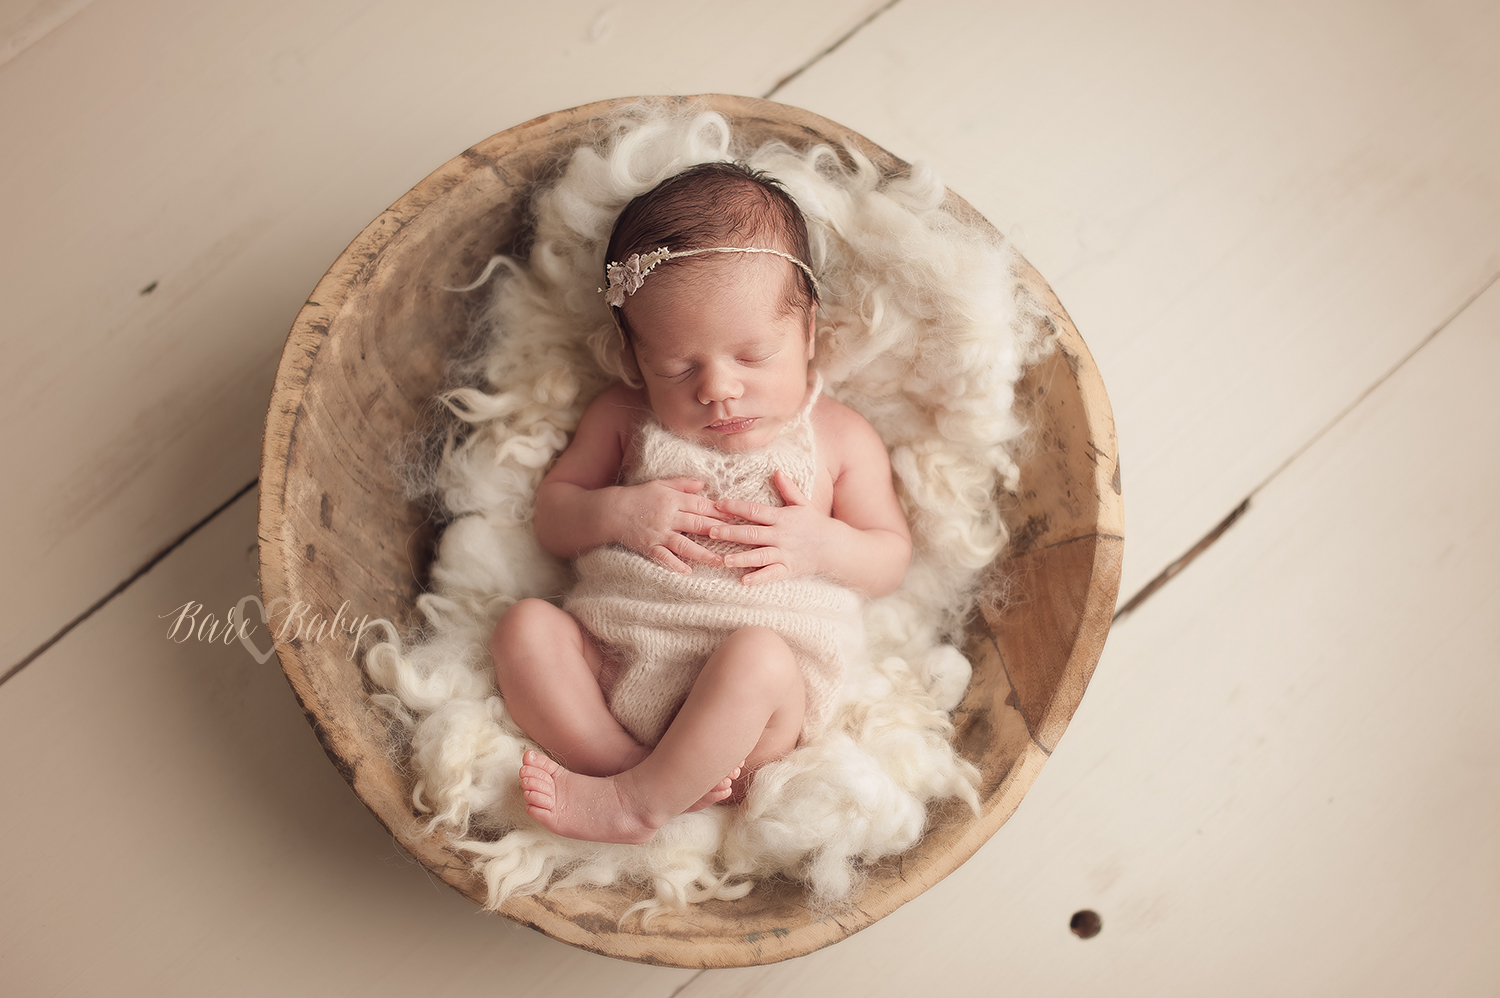 columbus-infant-photographer-bare-baby-photography.jpg